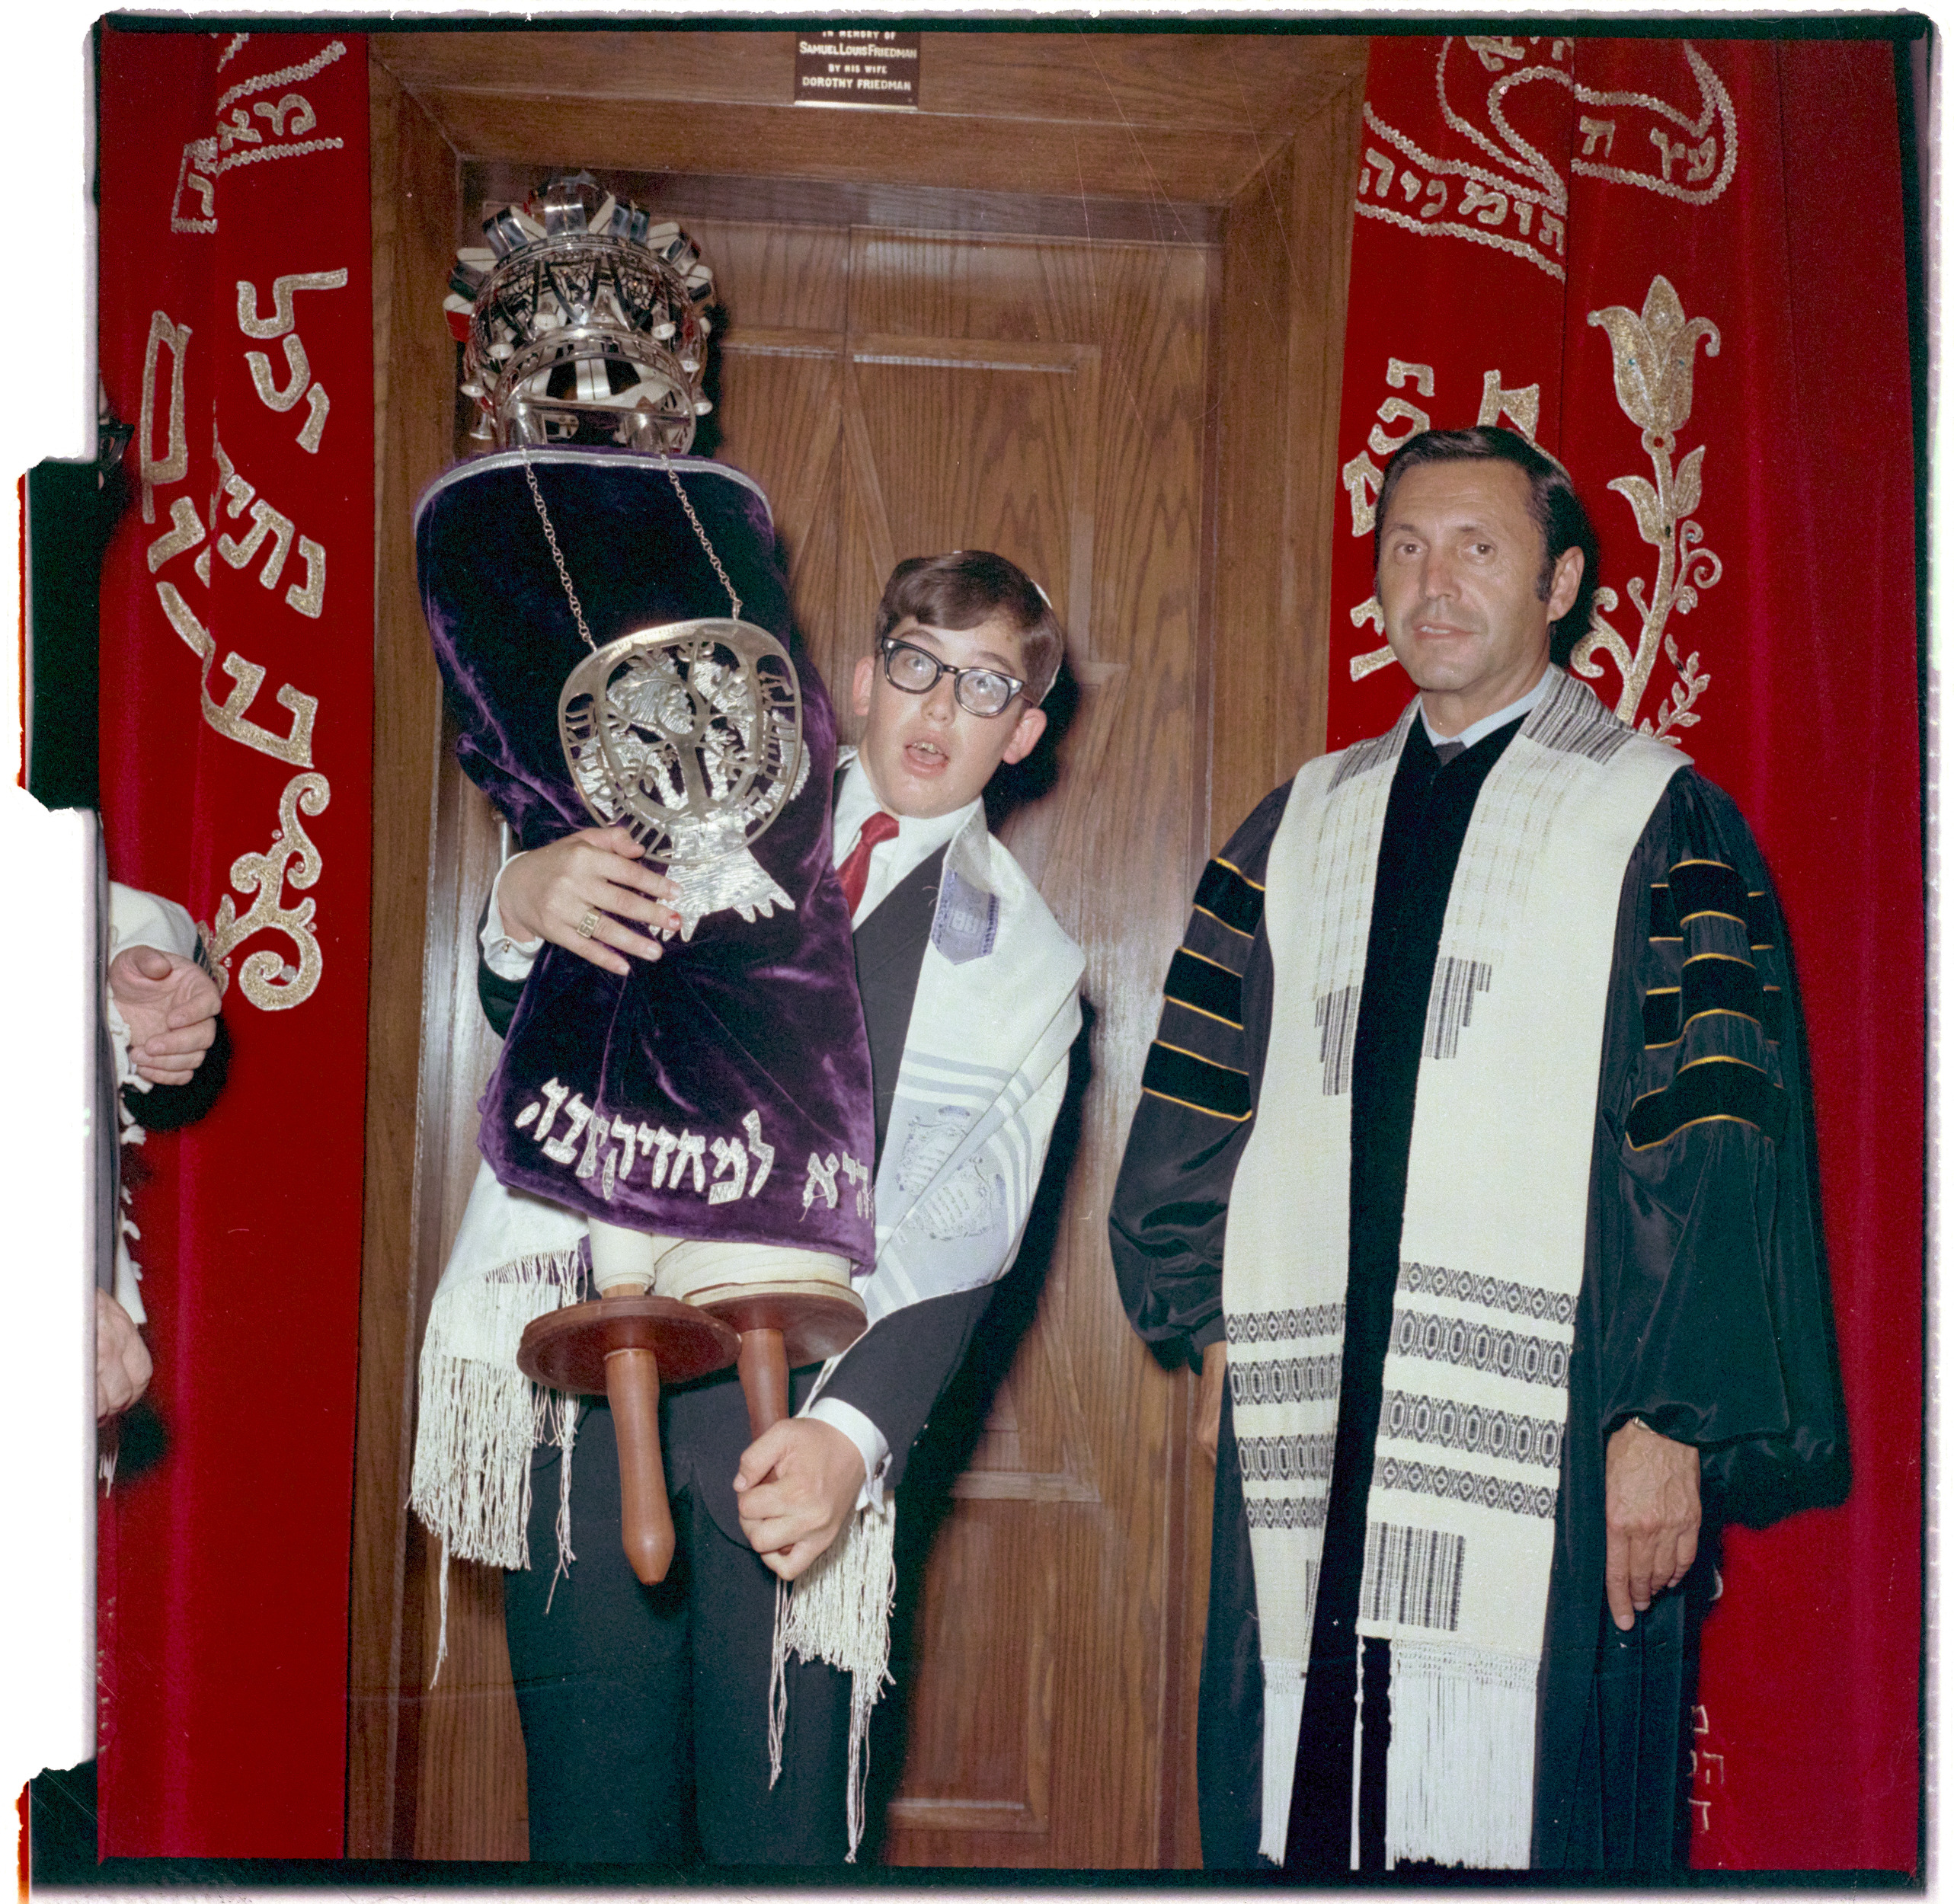 Photographs of David Steinberg's Bar Mitzvah, image 01